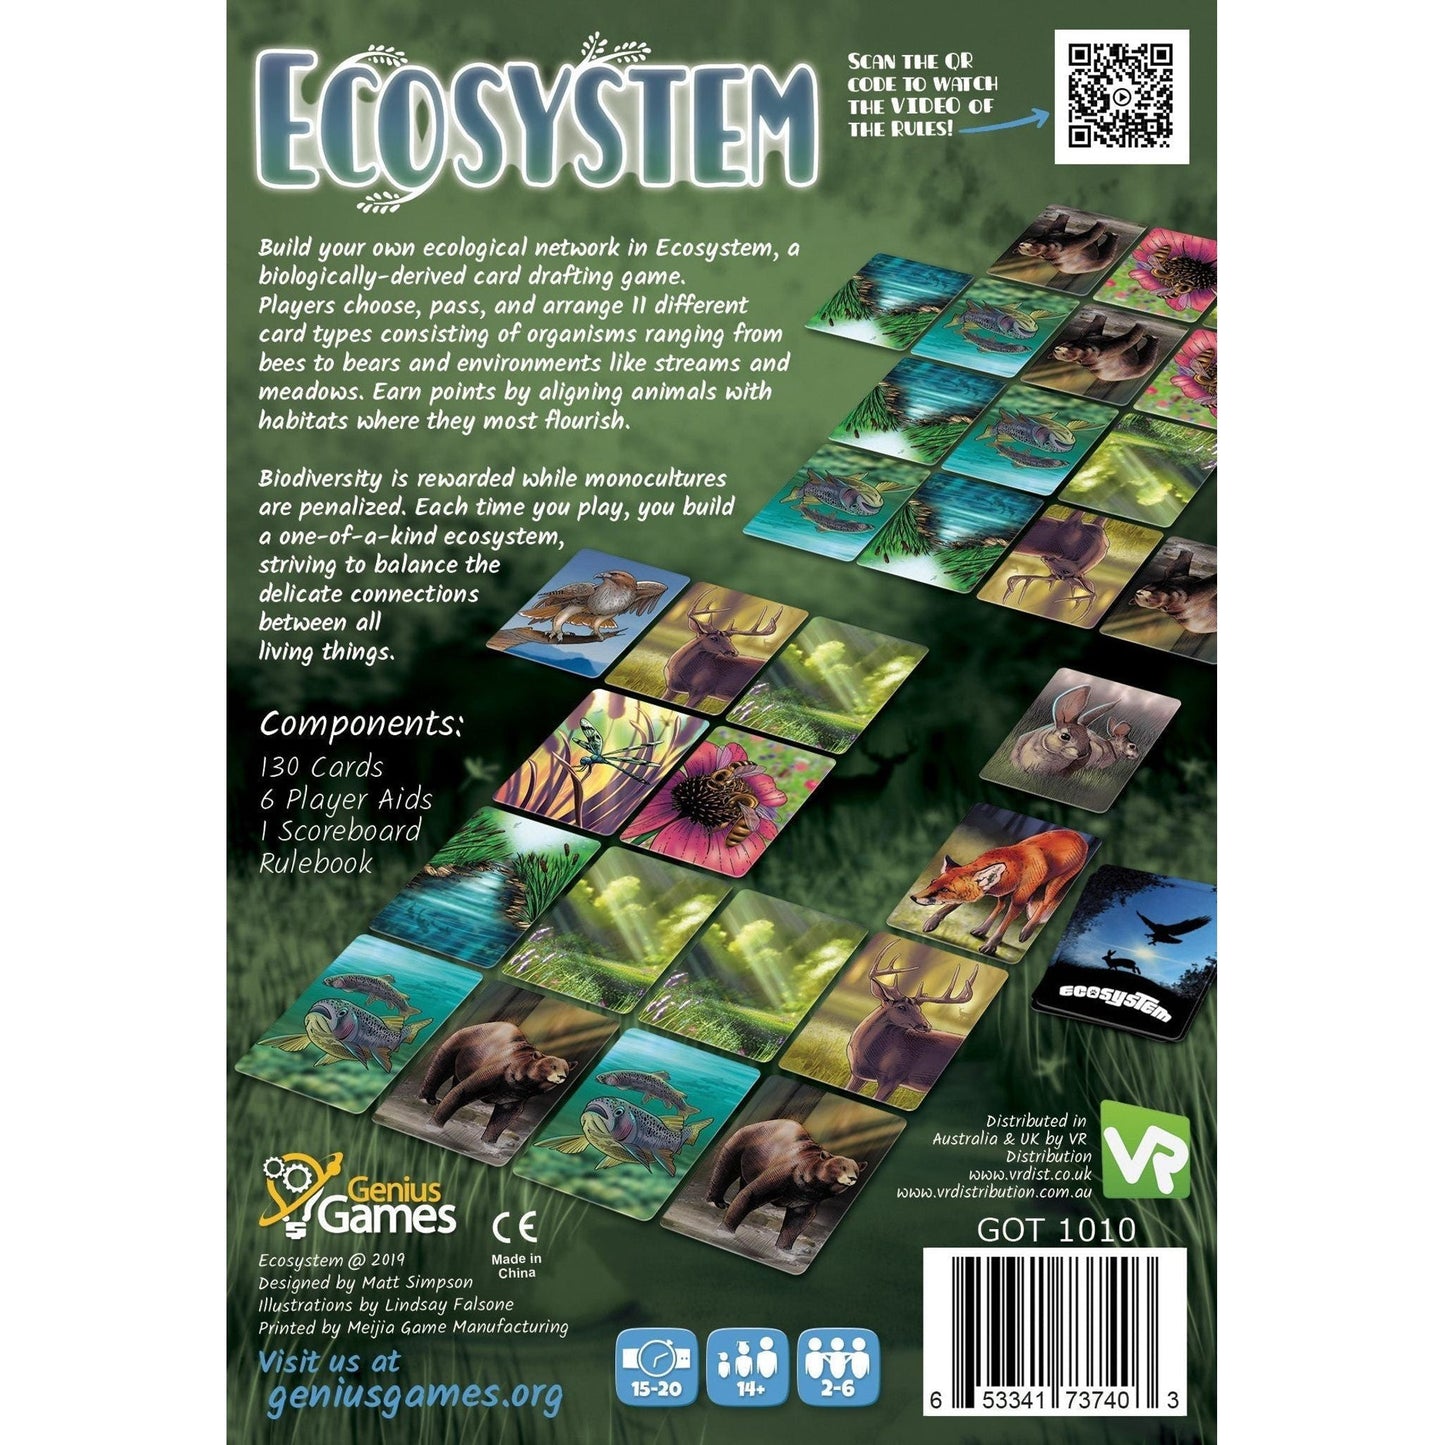 Ecosystem - Toybox Tales